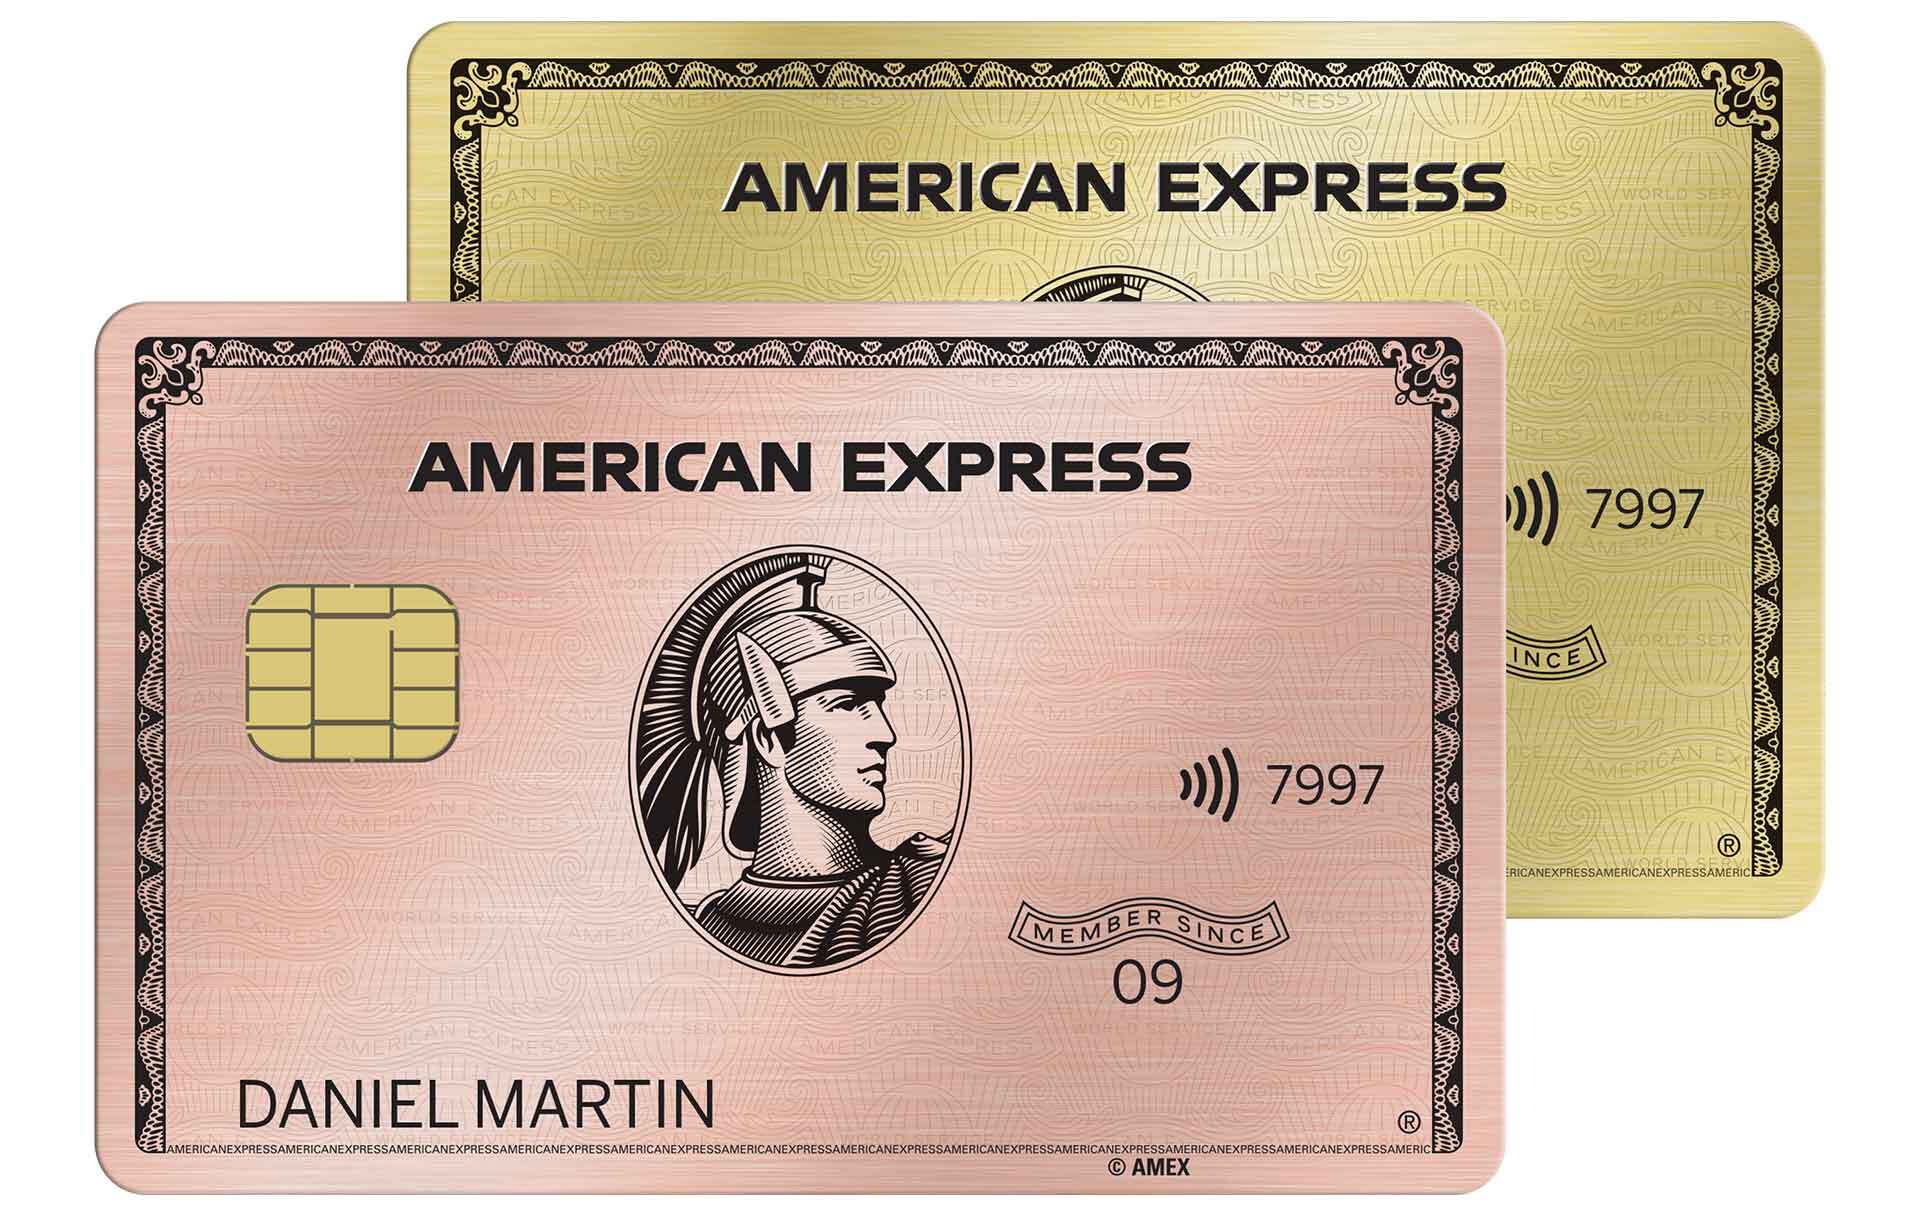 The Platinum Card American Express Aeroméxico